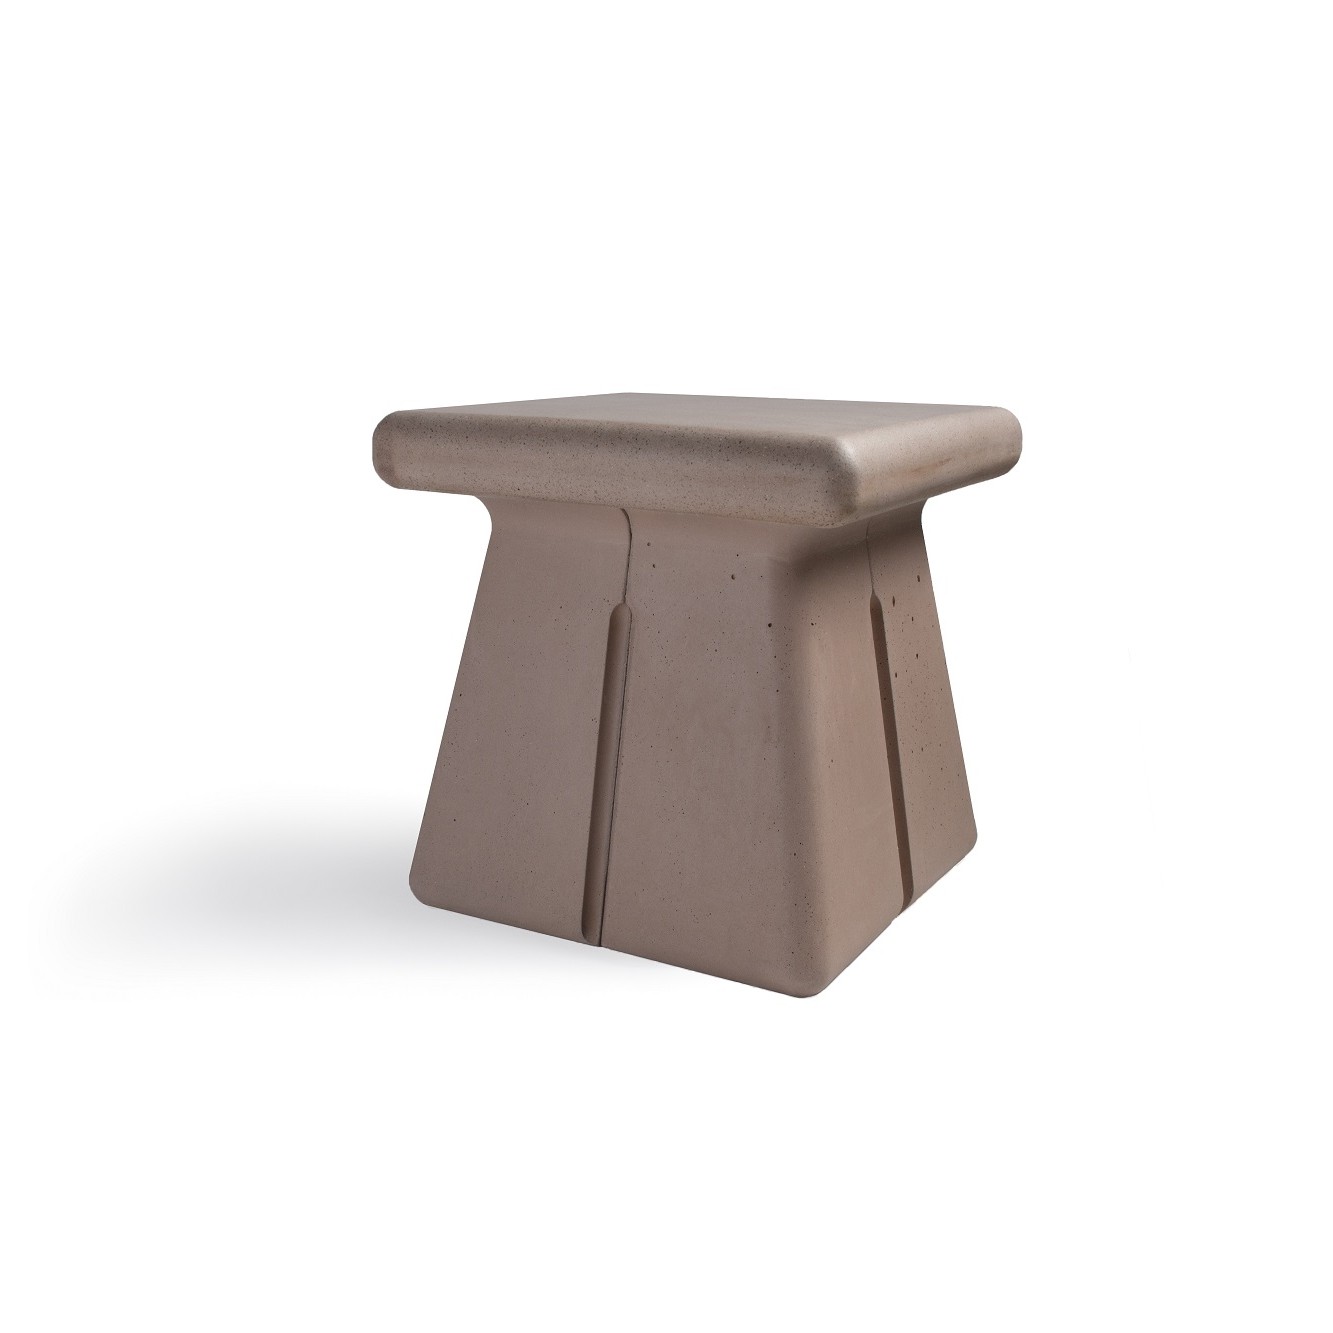 Cube tan cement stool by sotiris lazou design studio low res